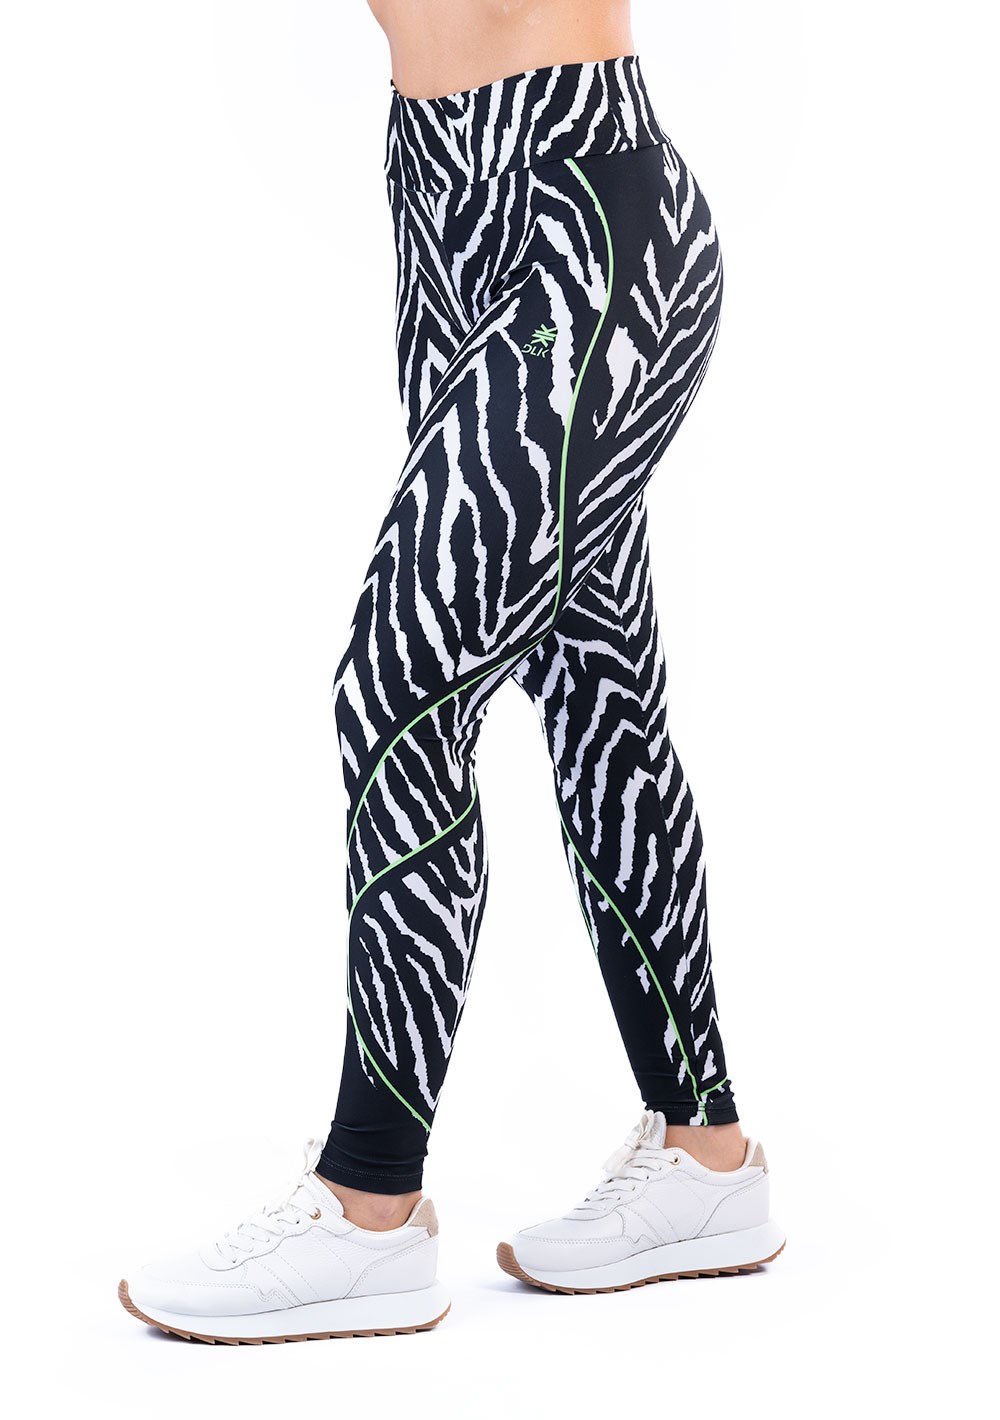 Legging fitness feminina new printed estampada zebra